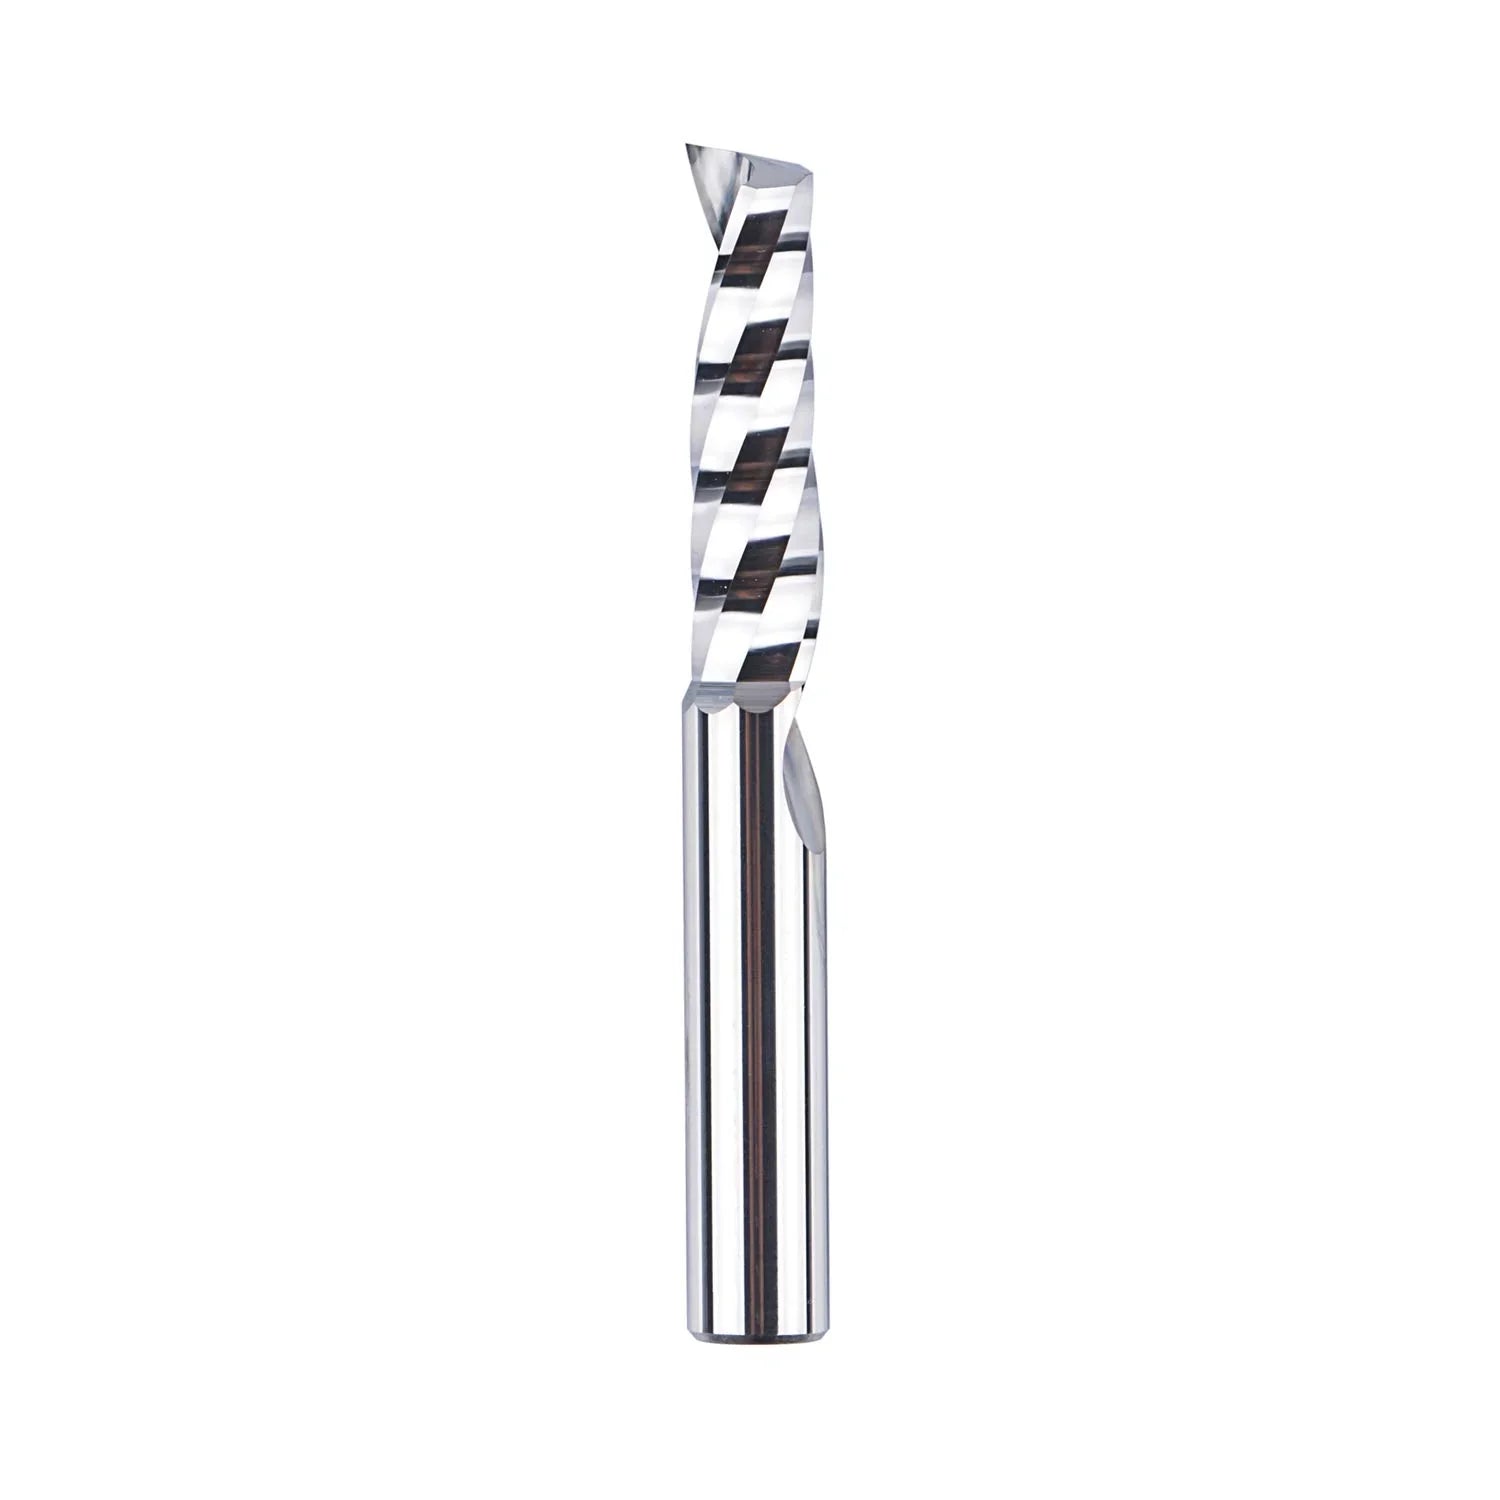 SpeTool UpCut Single Flute Milling Cutter 6mm Dia 22mm Cutting Length